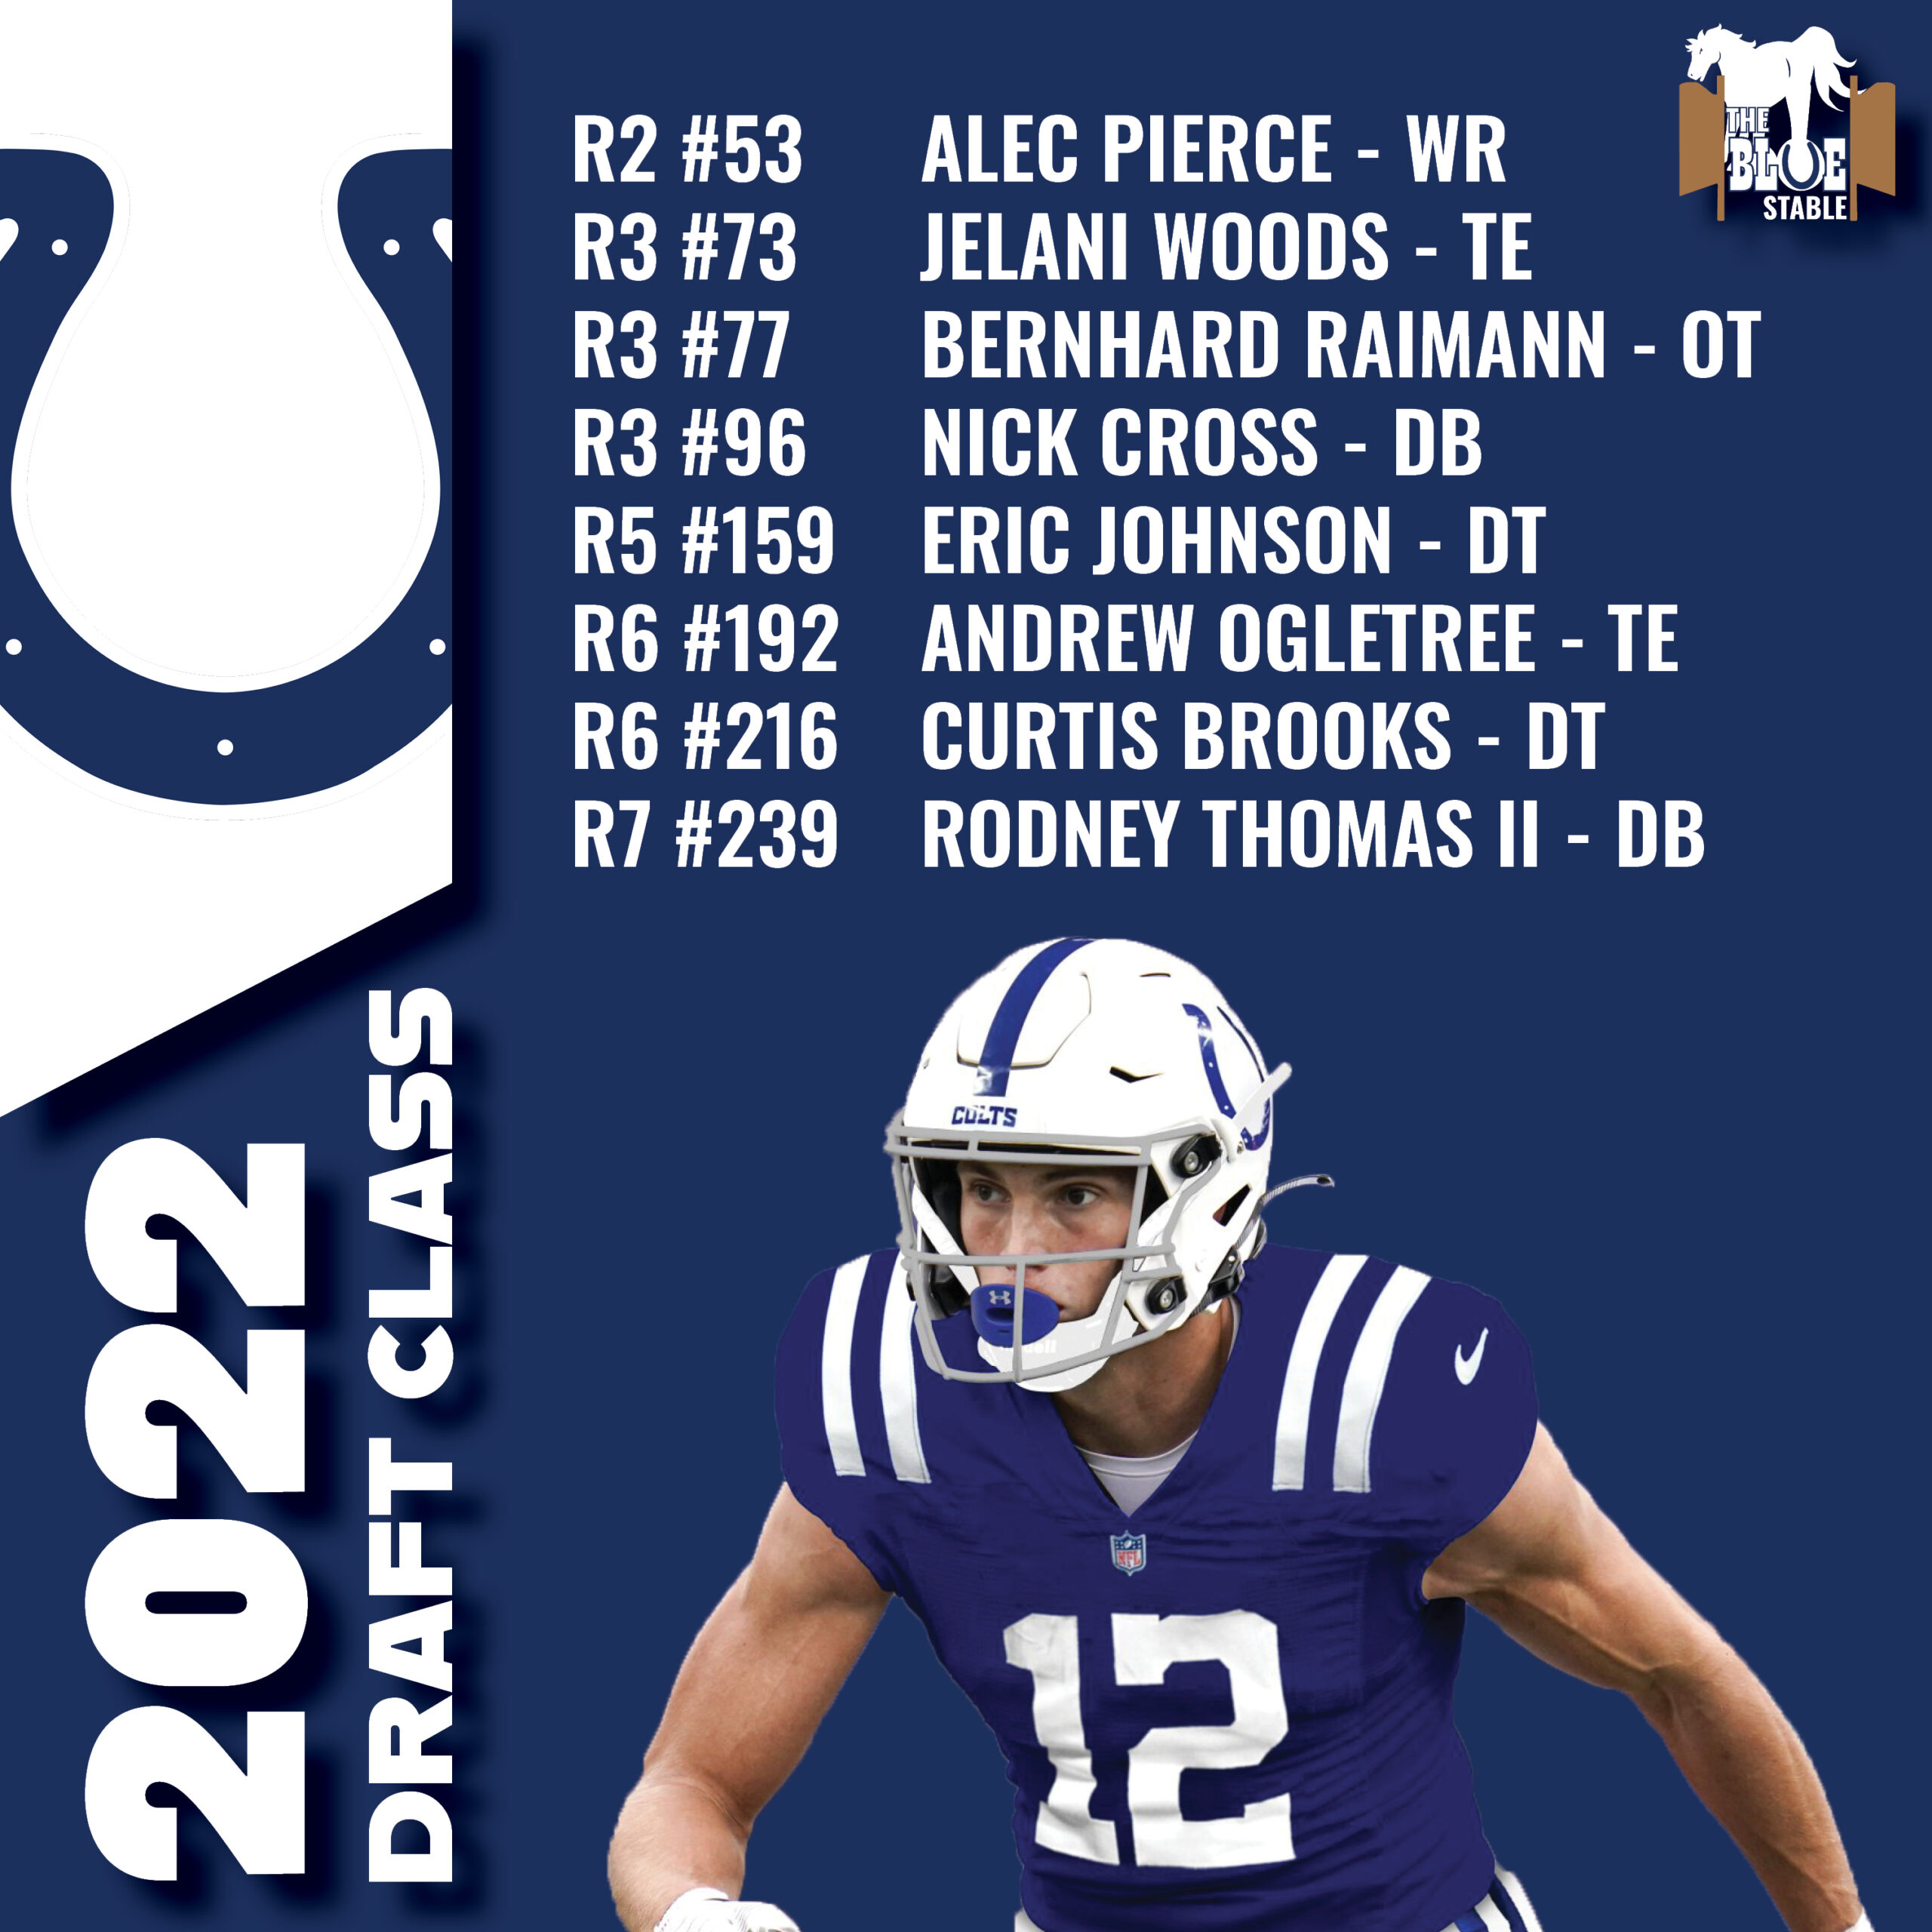 2022 NFL draft: Colts select OT Bernhard Raimann with No. 77 pick